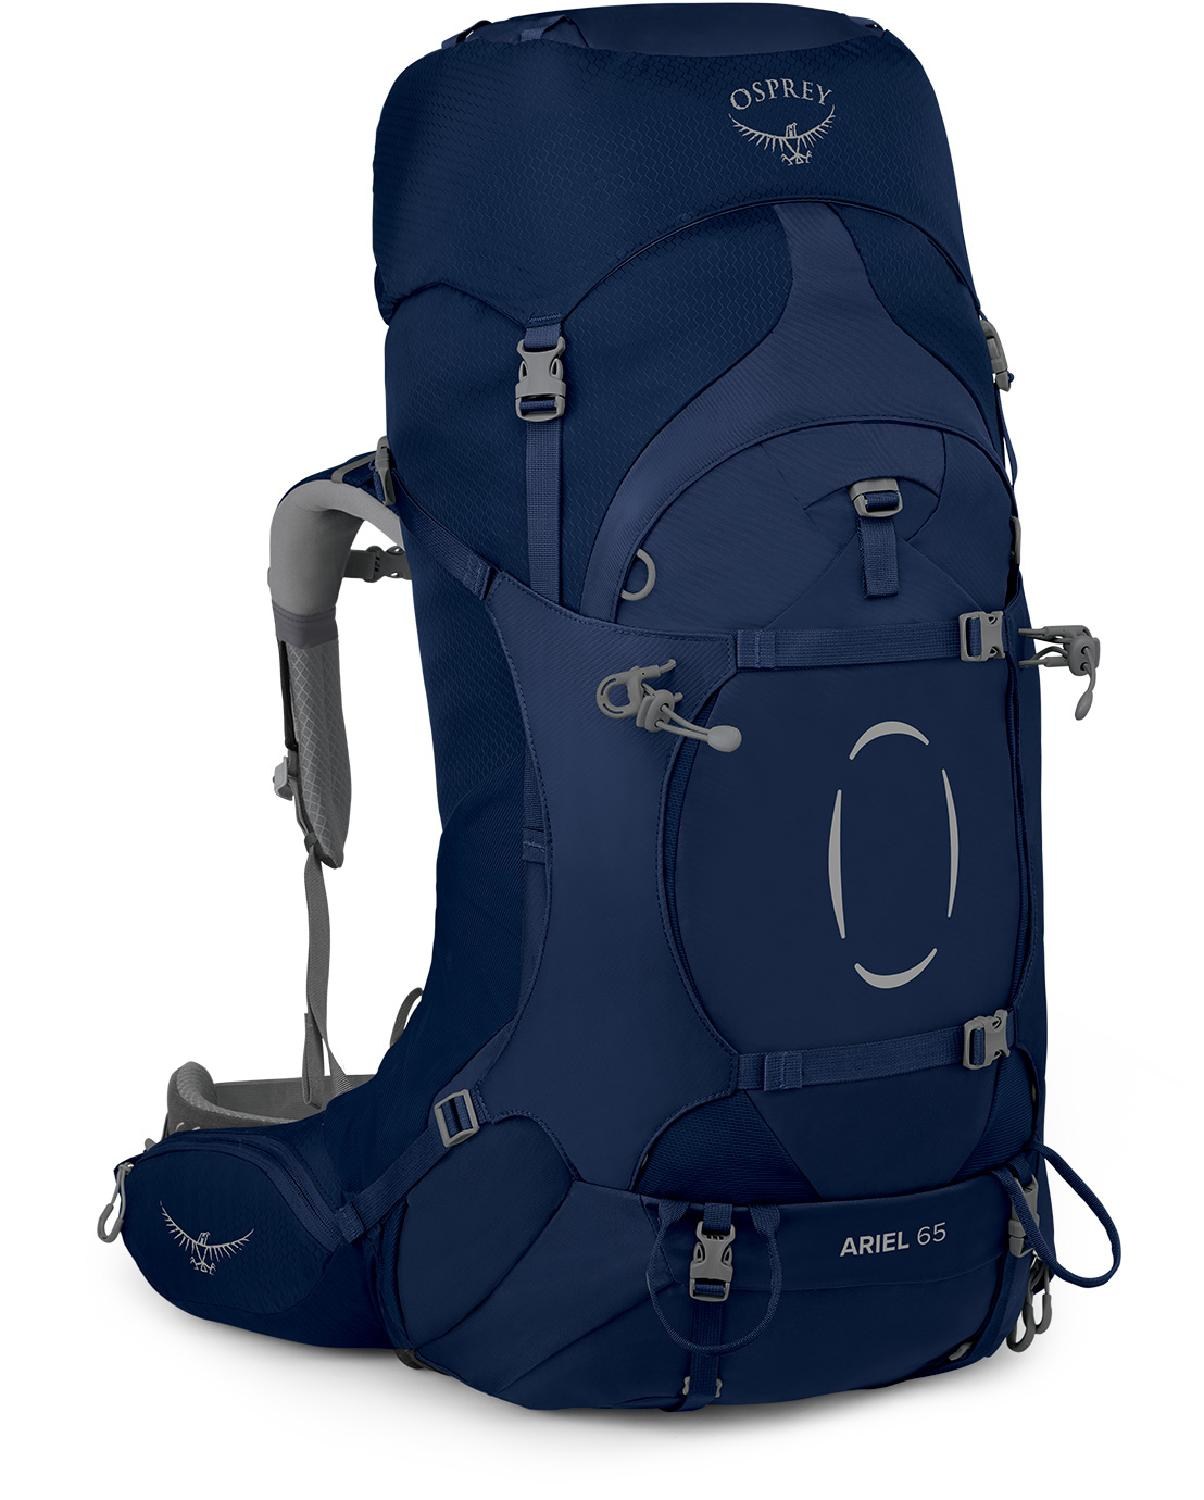 Osprey Ariel 65 women's backpacking pack